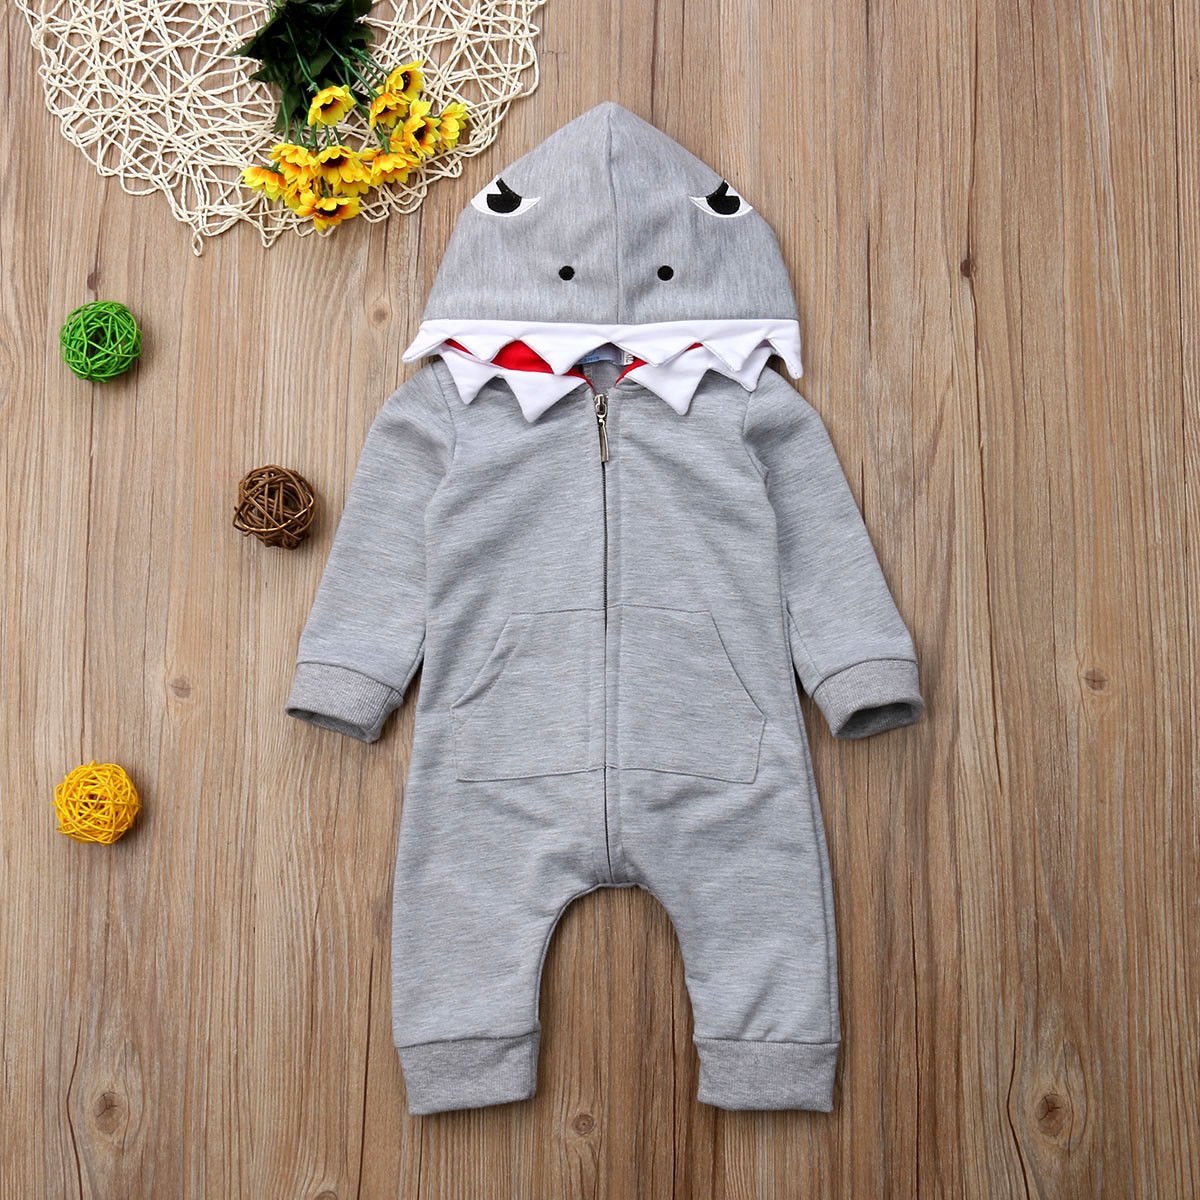 Cartoon shark hooded robes - Adorable Attire